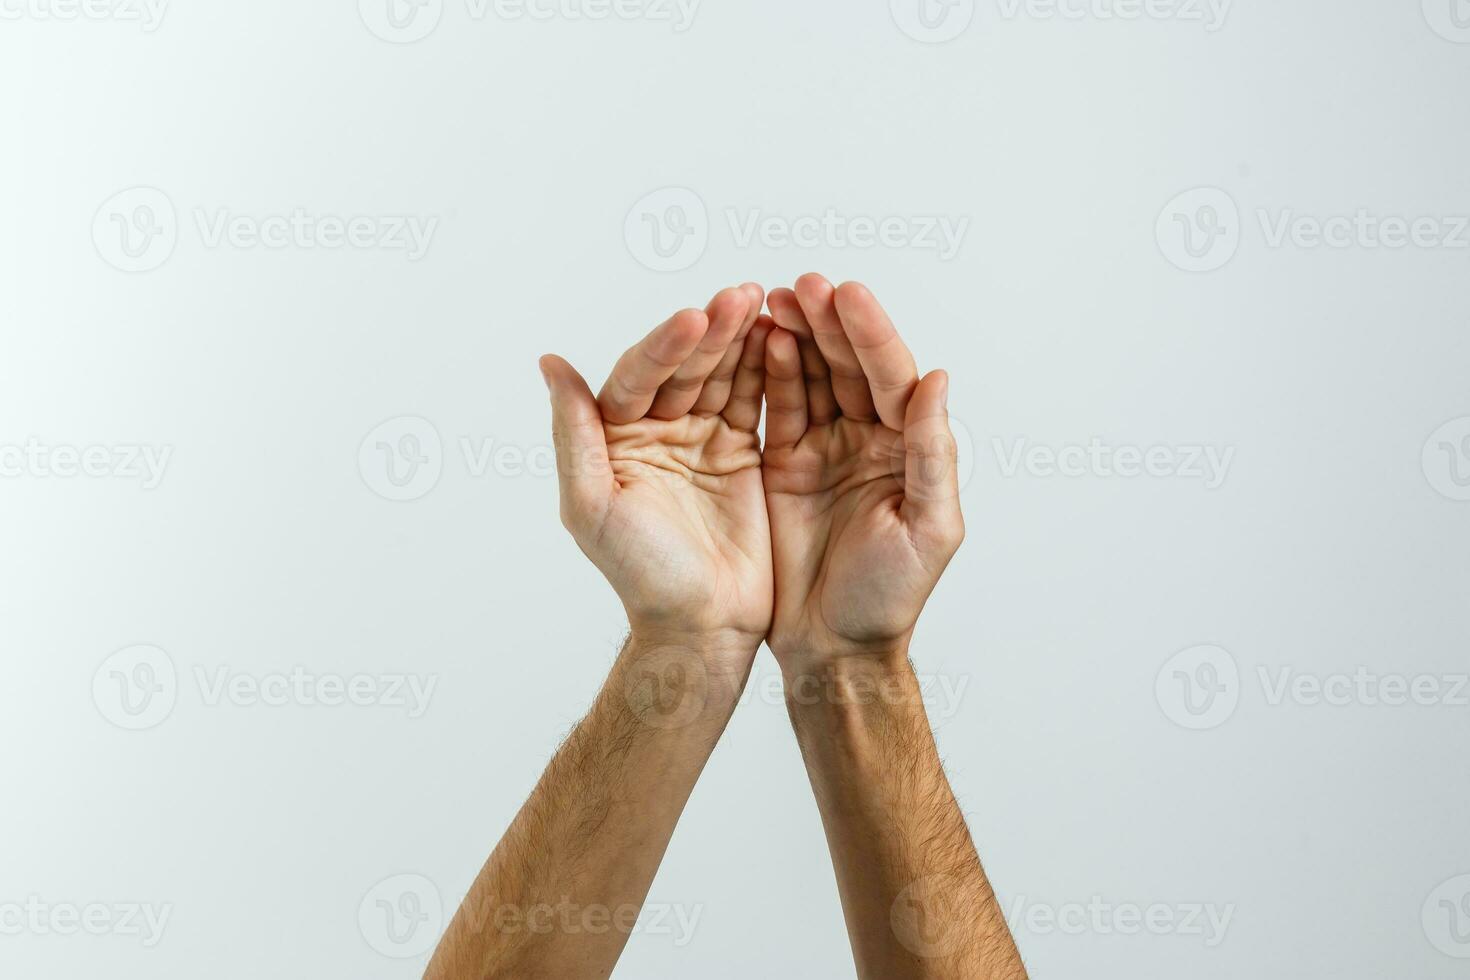 öppen handflatan hand gest av manlig hand.isolerad på vit bakgrund. foto